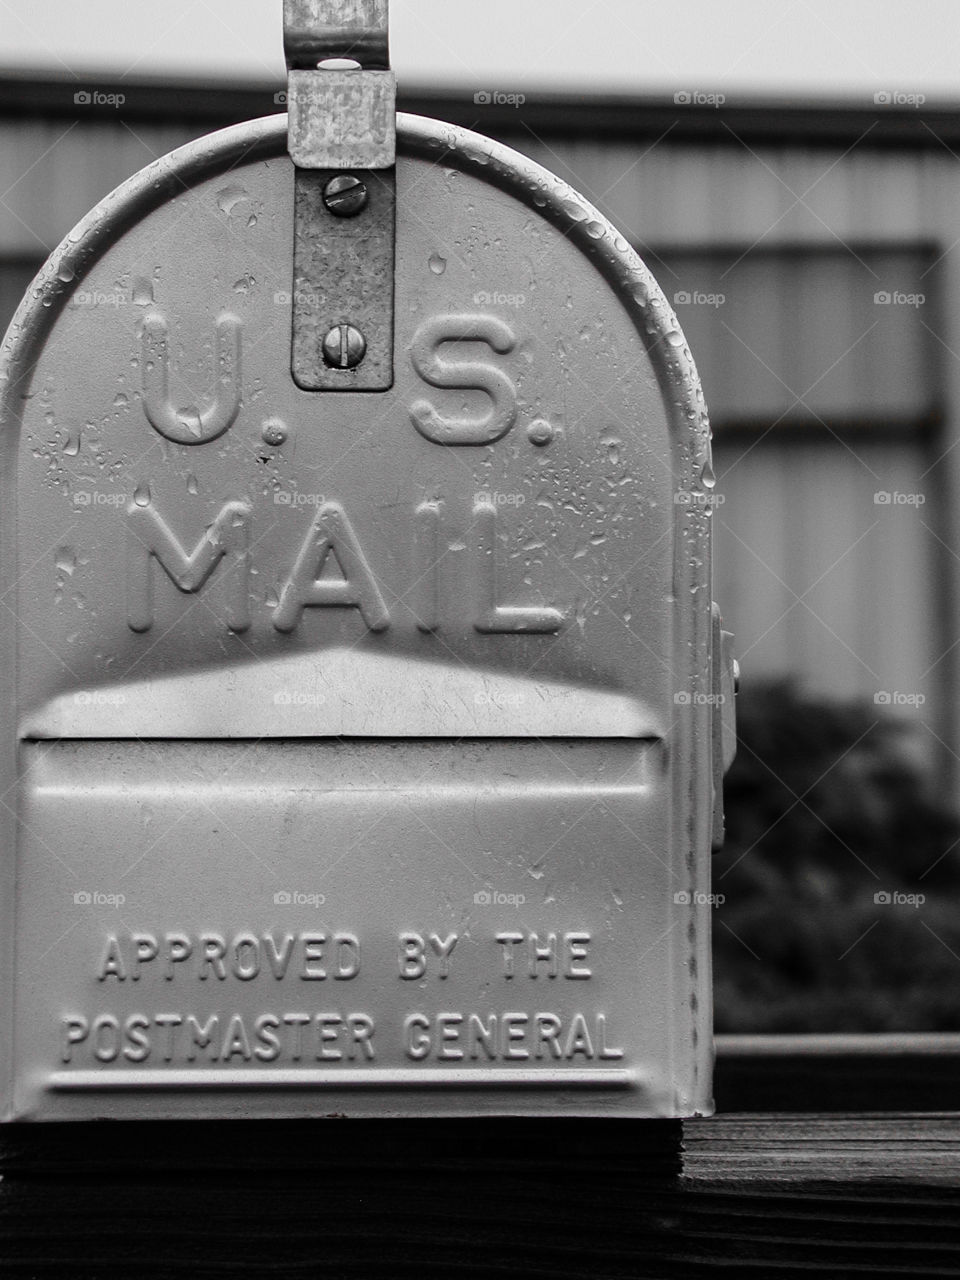 U.S. Mailbox in silver color